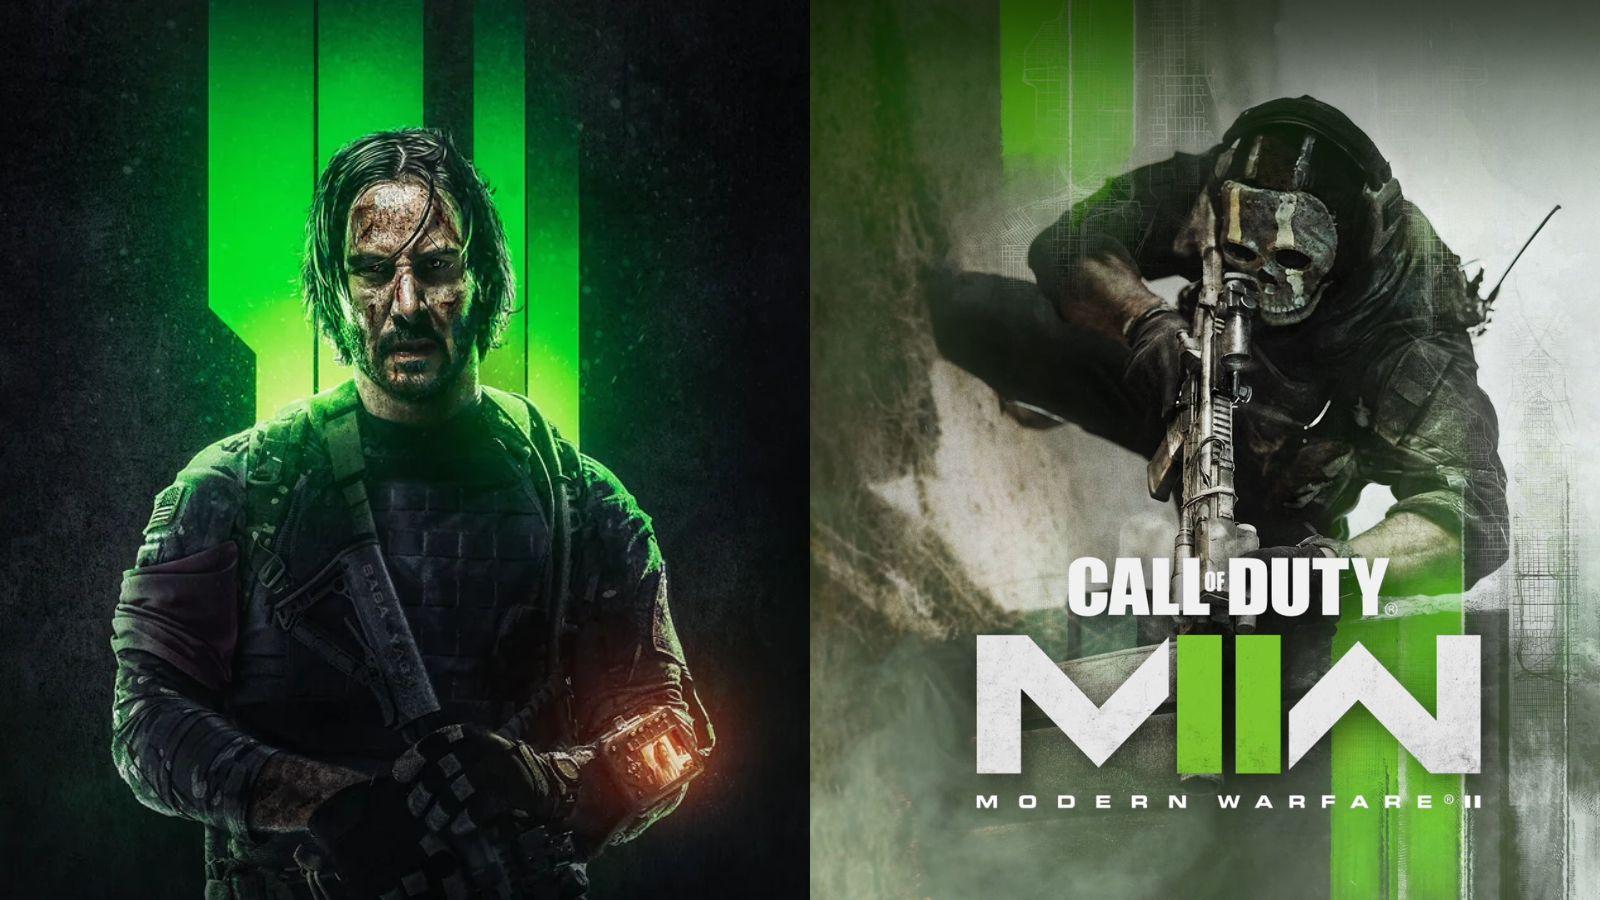 Modern Warfare 2 players call for John Wick skin to be made for Oni -  Dexerto